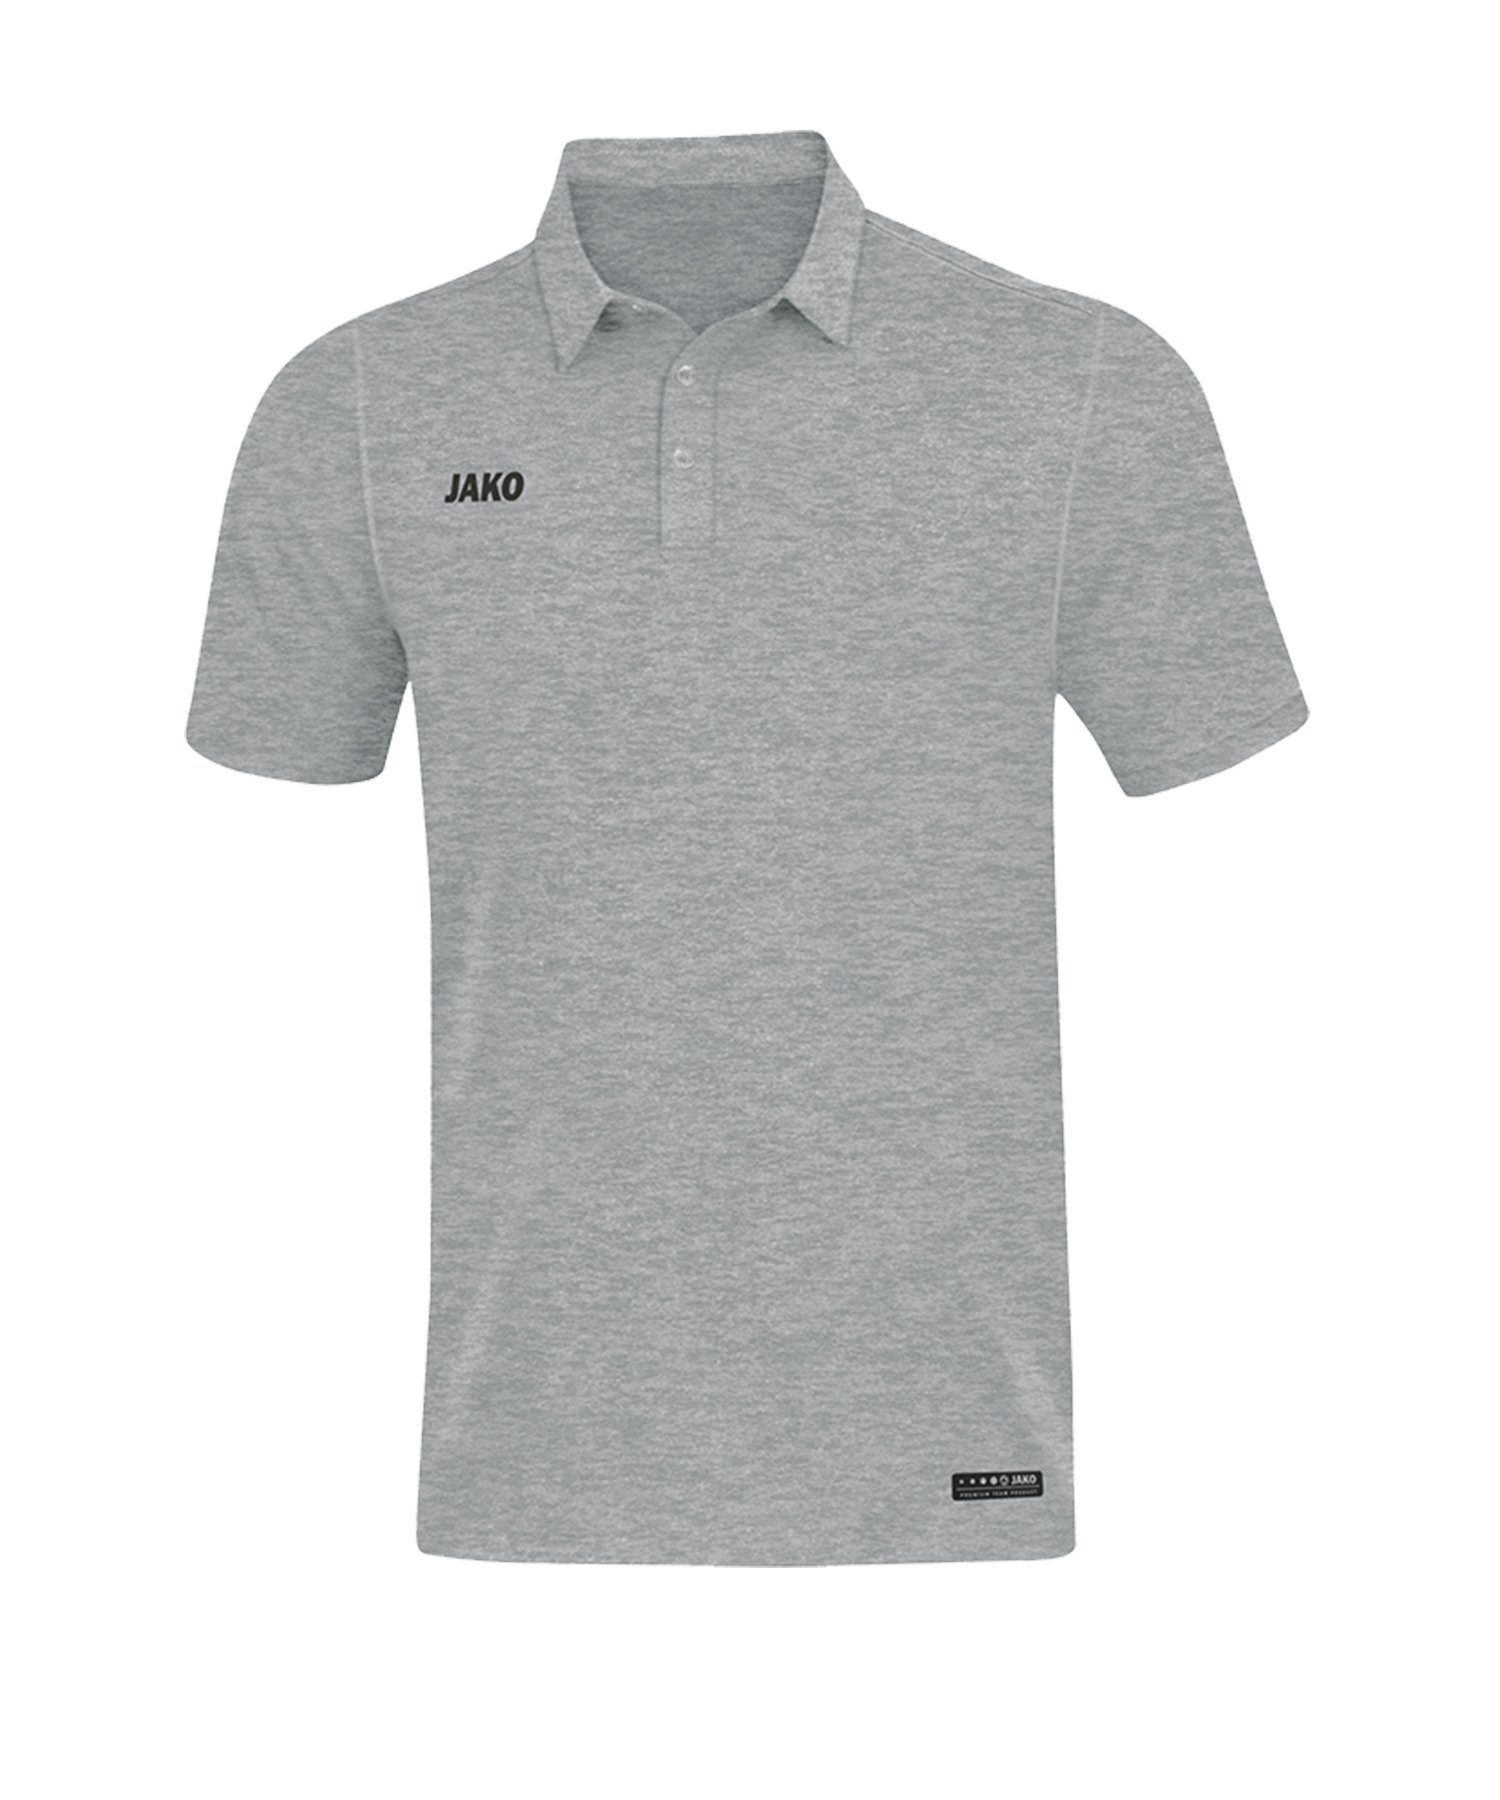 Basics Poloshirt default T-Shirt Jako Grauschwarz Premium